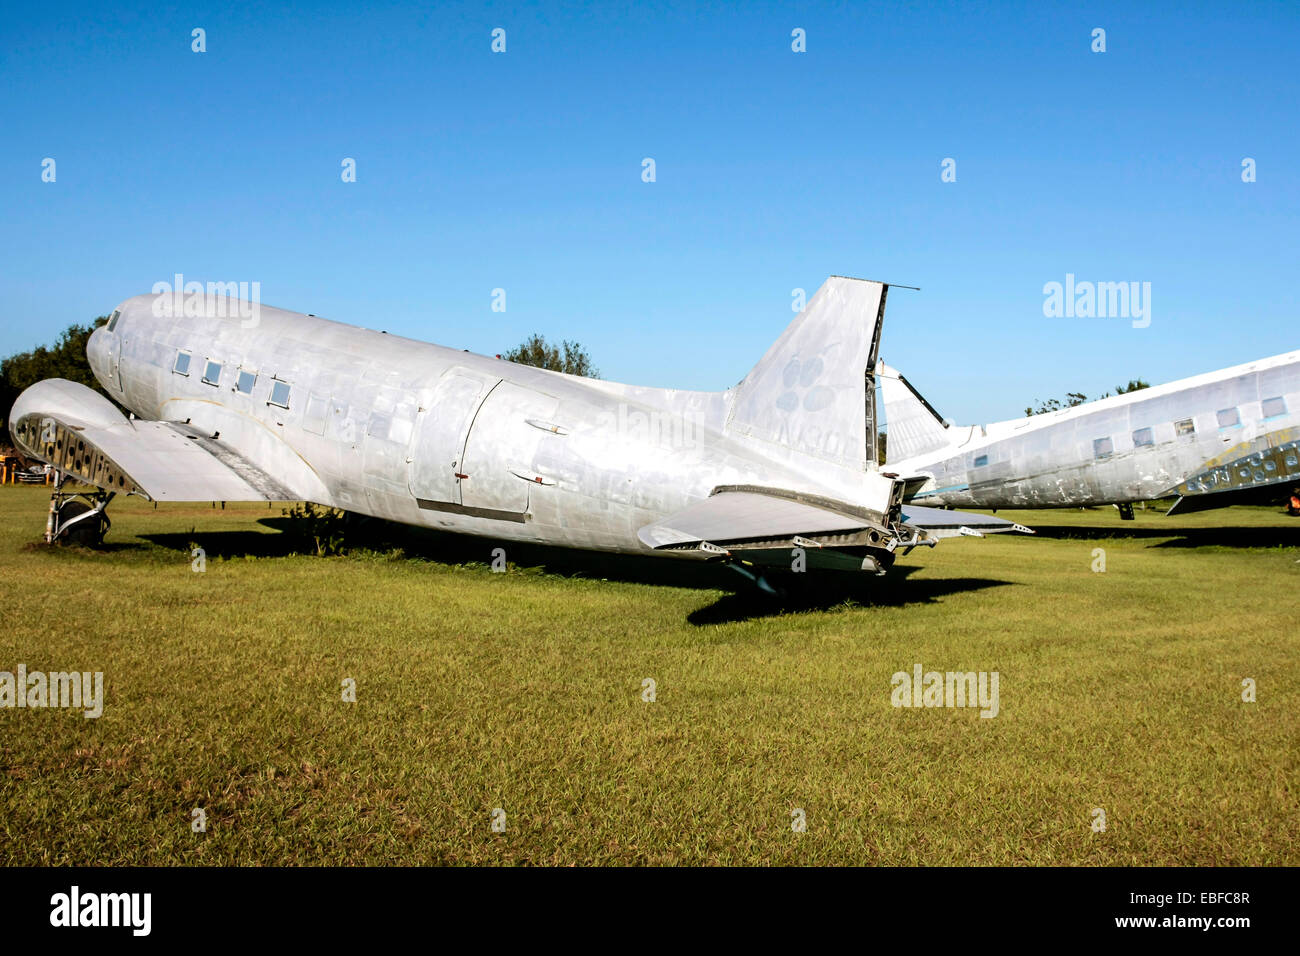 A group of Douglas DC-3 aircraft at an aviation junkyard in Florida Stock Photo